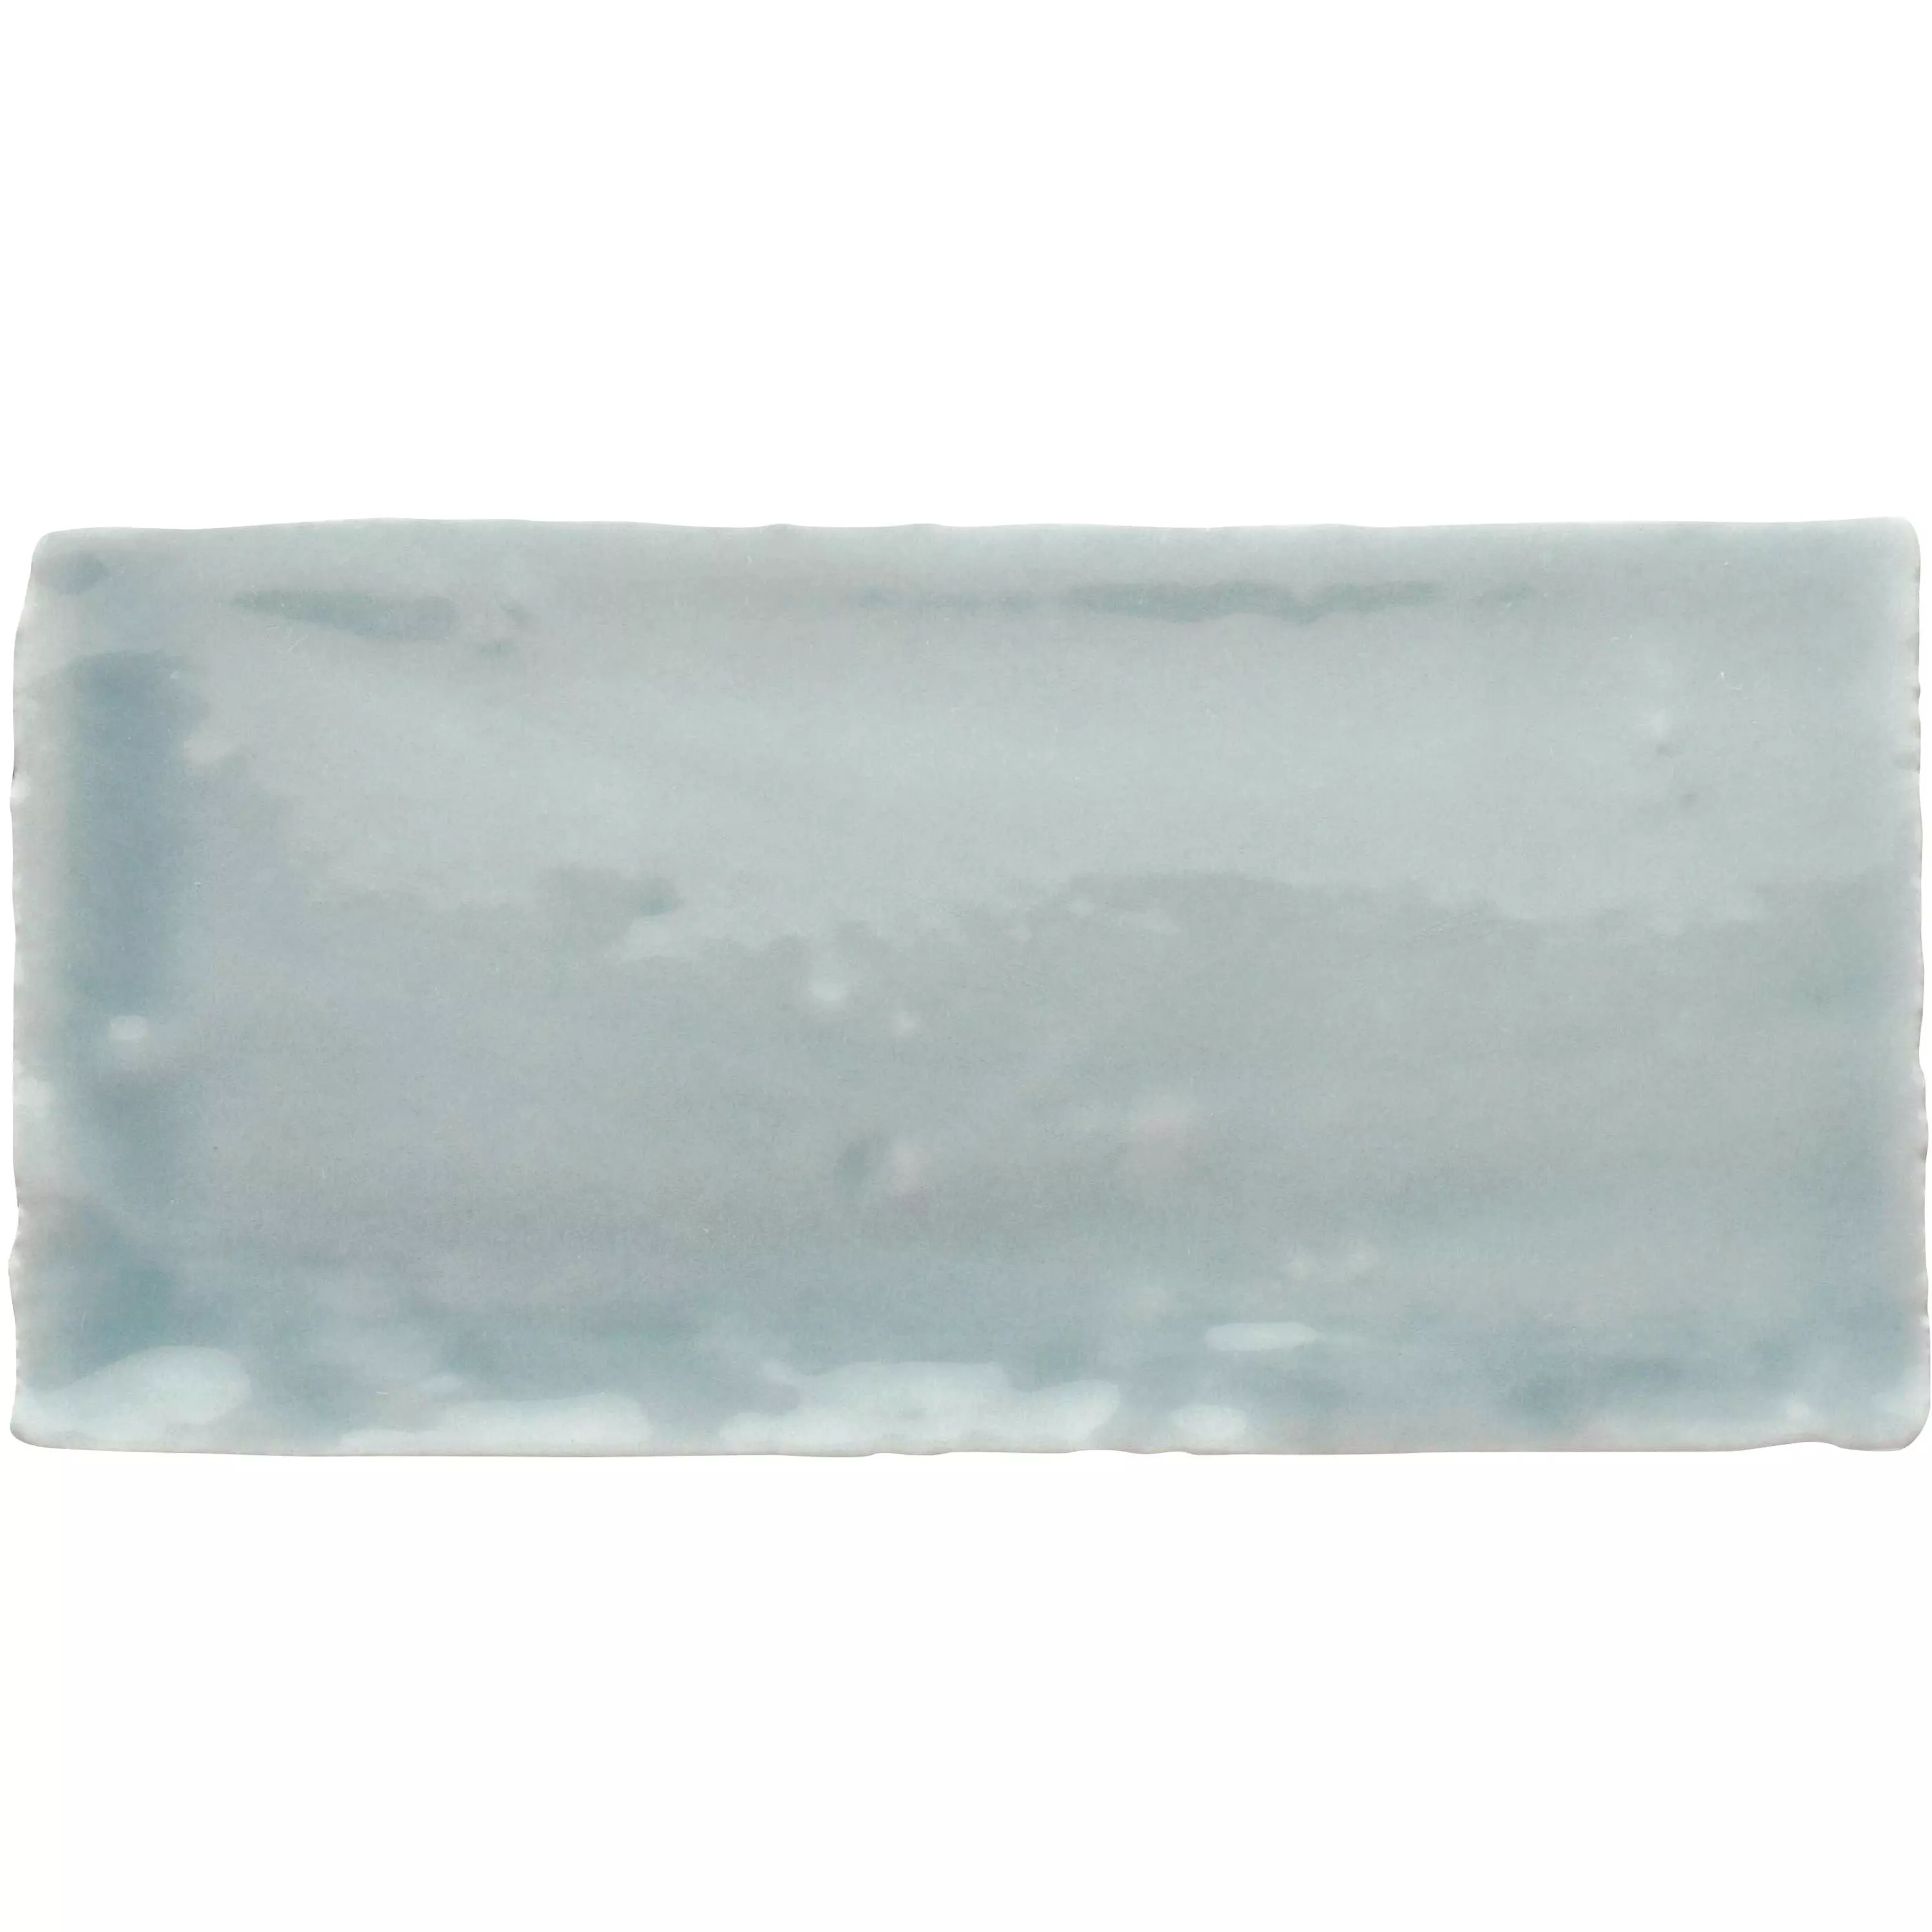 Sample Wandtegels Algier Handgemaakte 7,5x15cm Hemelsblauw